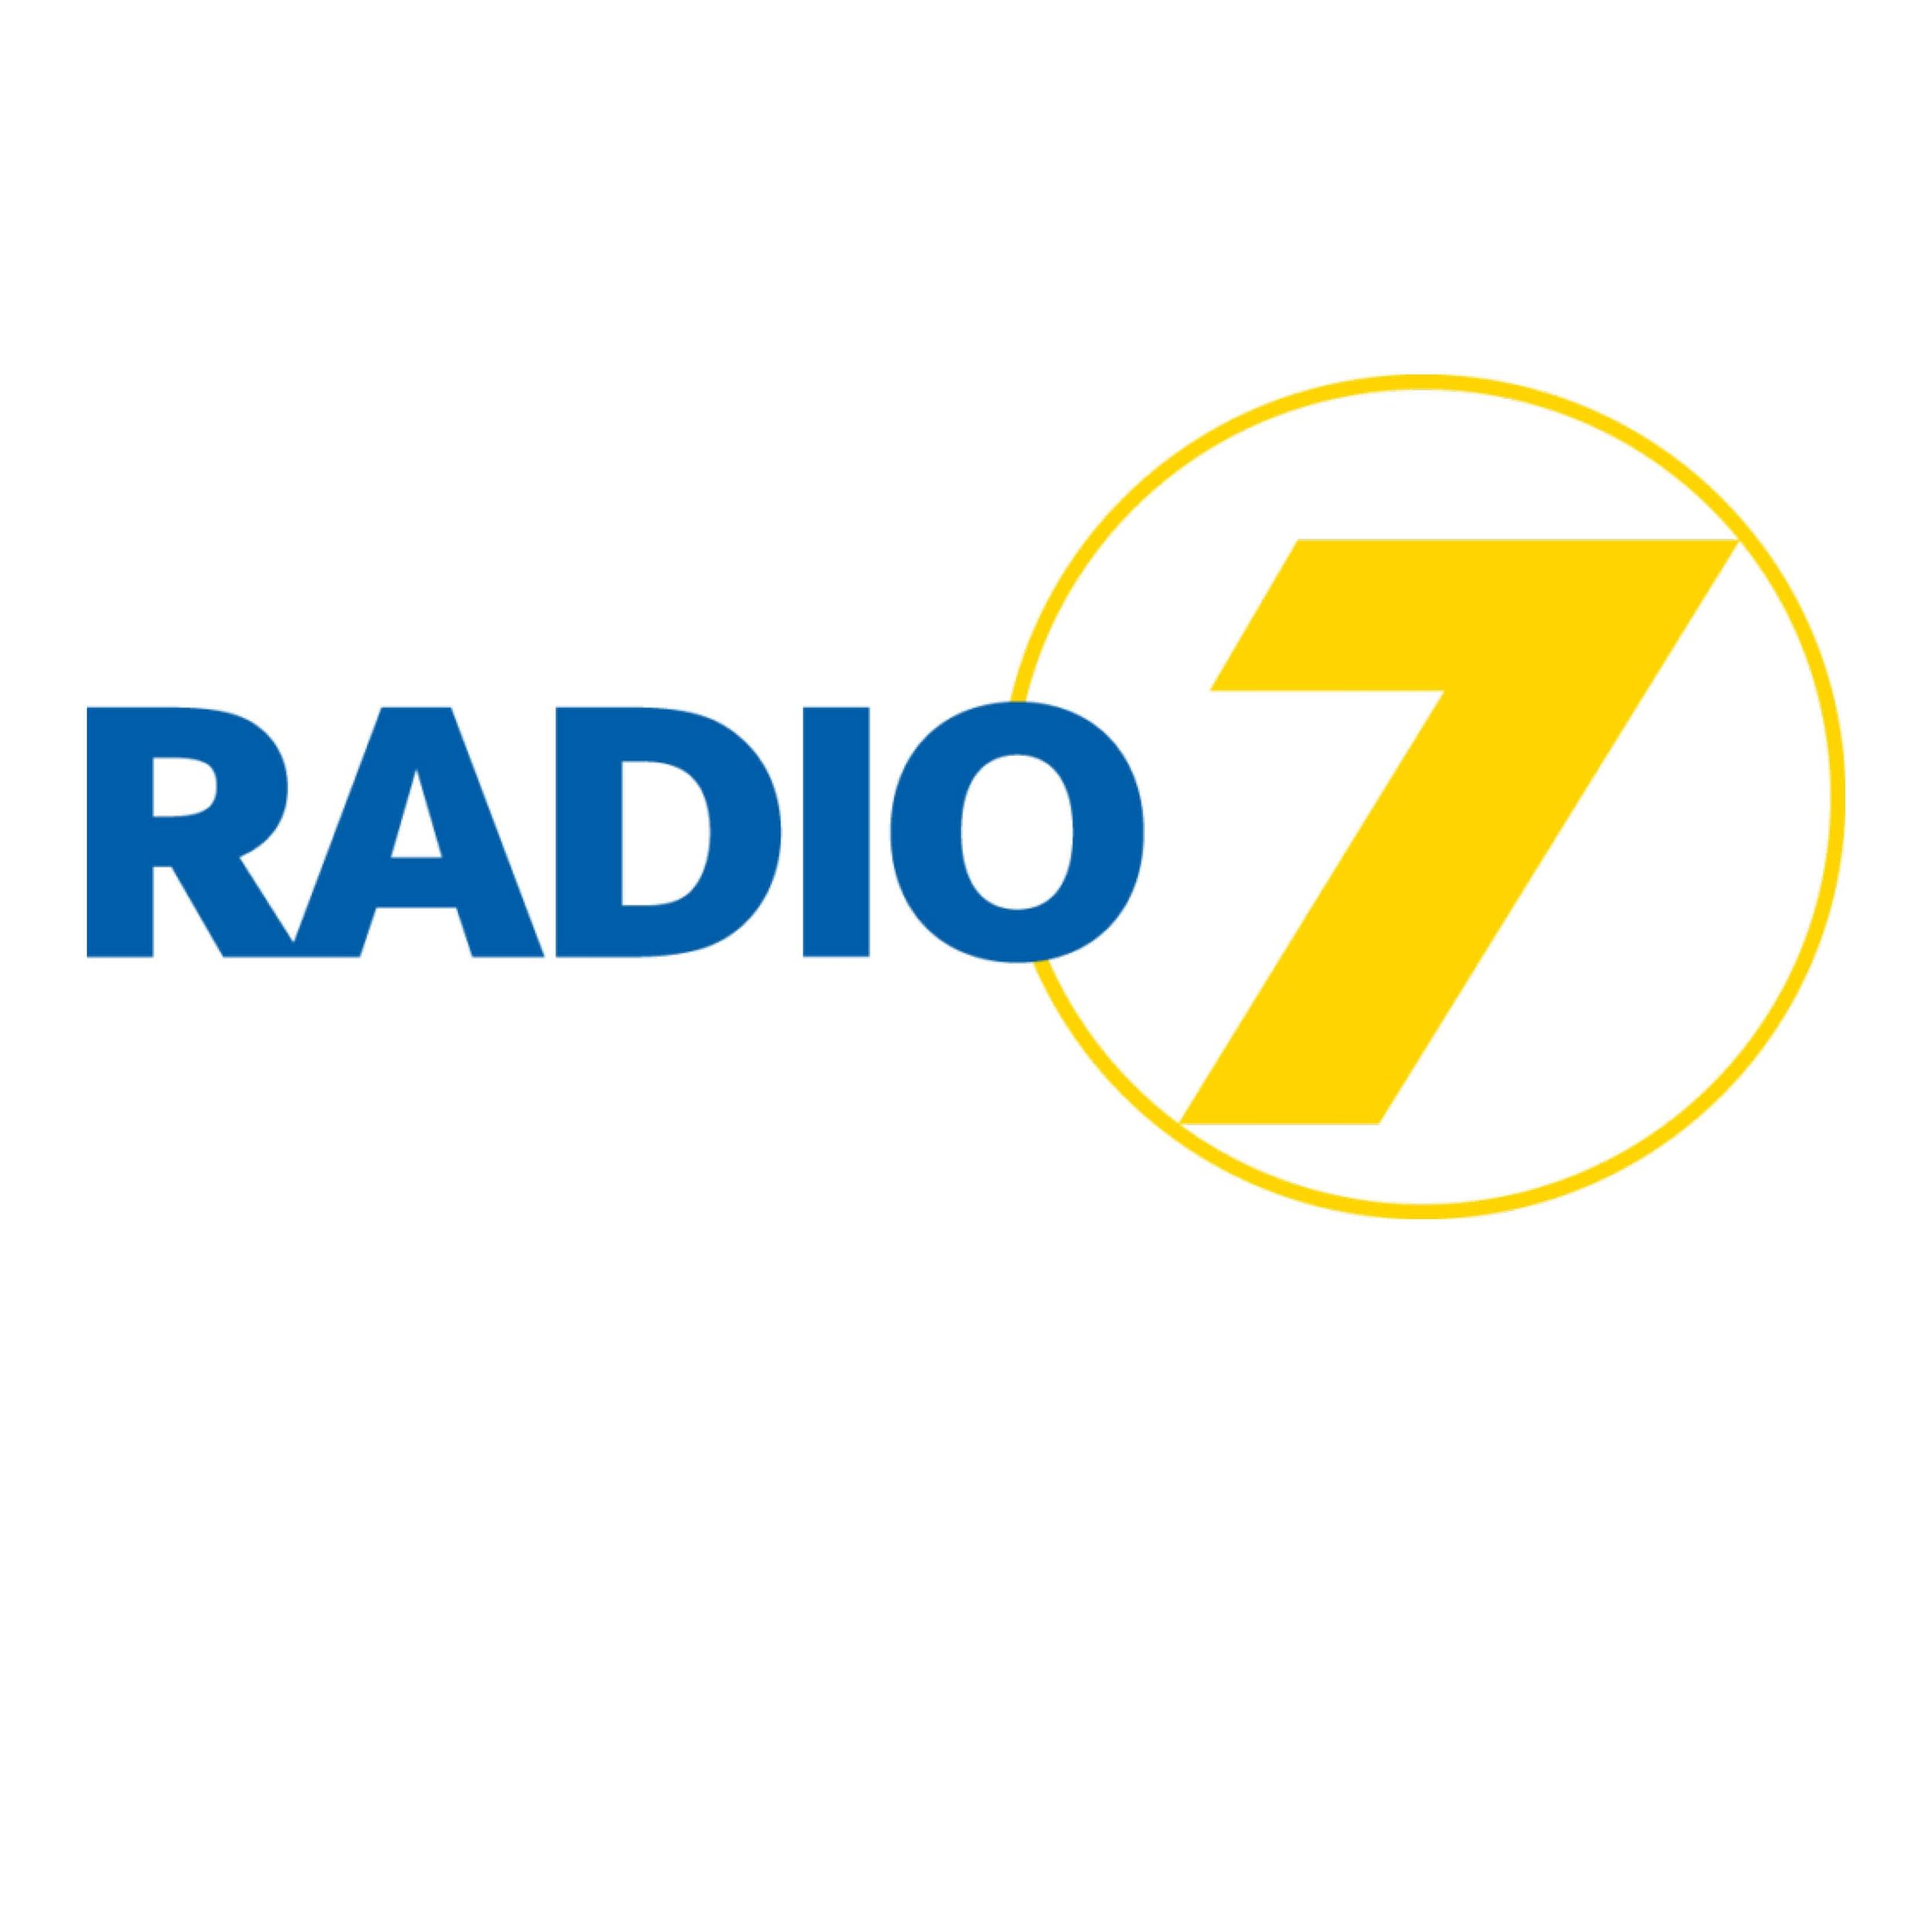 Radio 7 (Kopie) (Kopie)